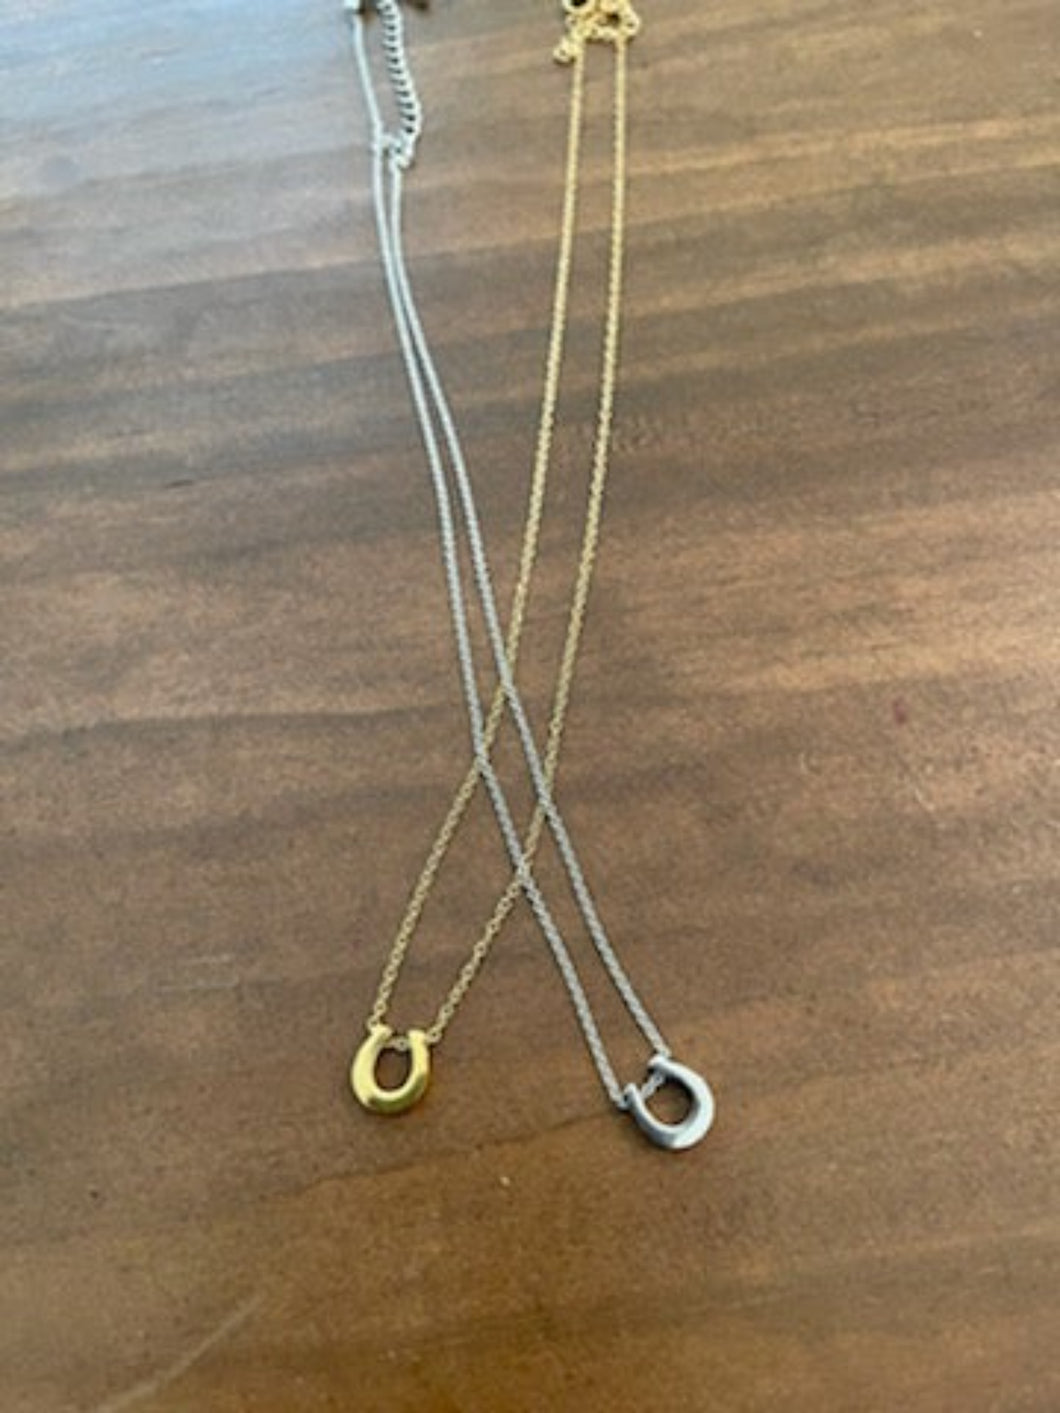 lucky little horseshoe pendant necklace